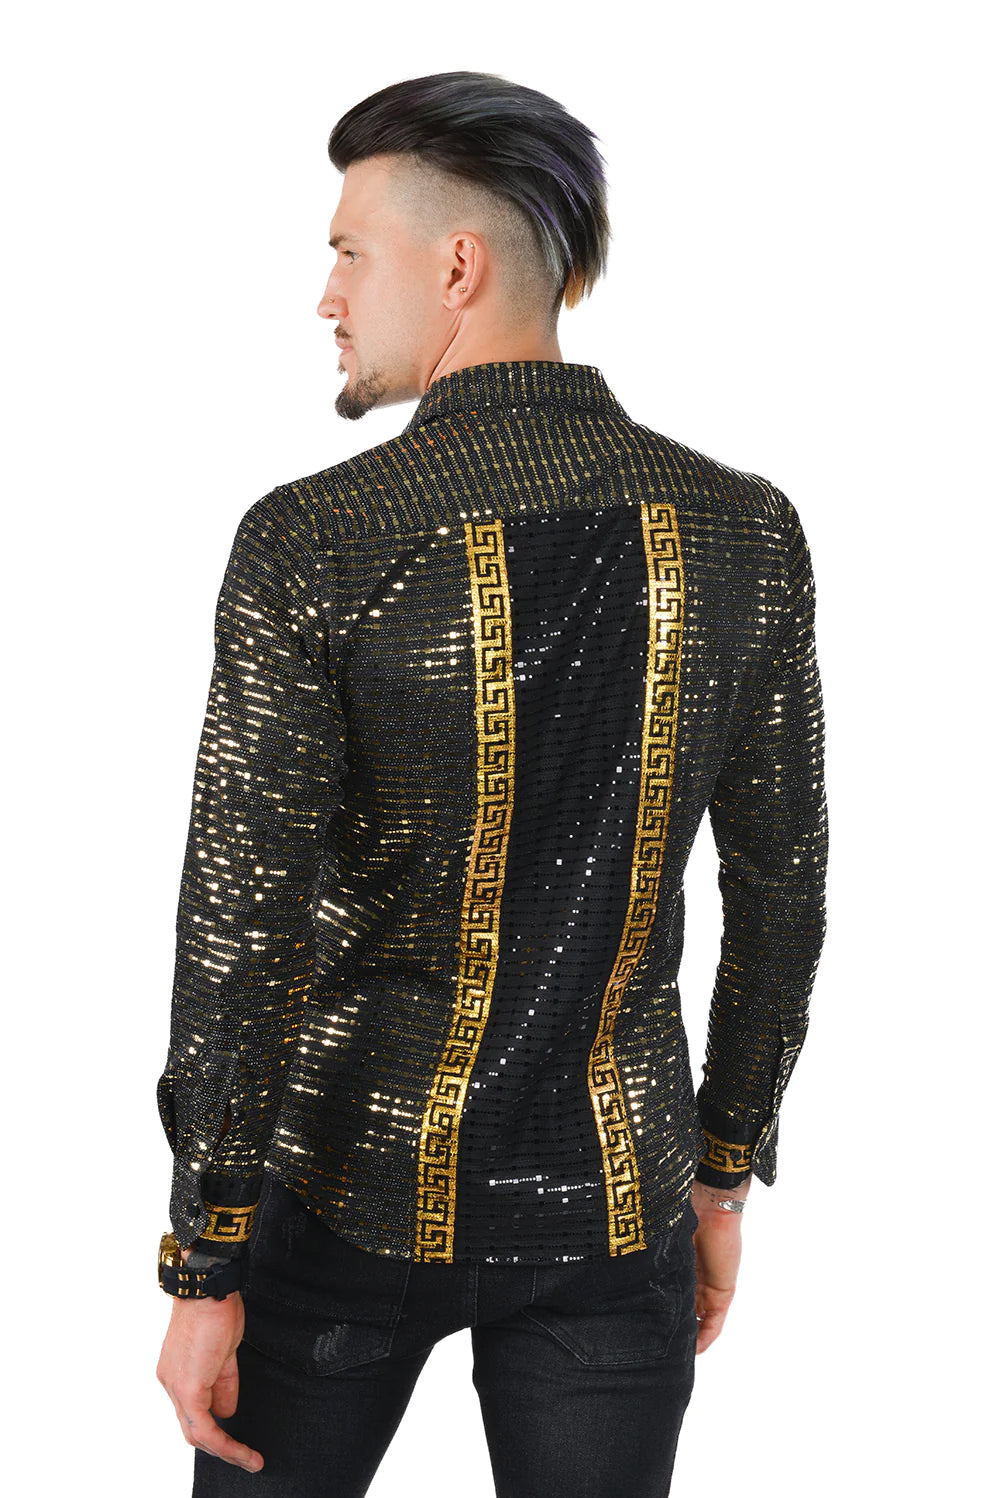 La Greca Gold and Black Two-Tone Greek Key Pattern Long-Sleeve Shirt